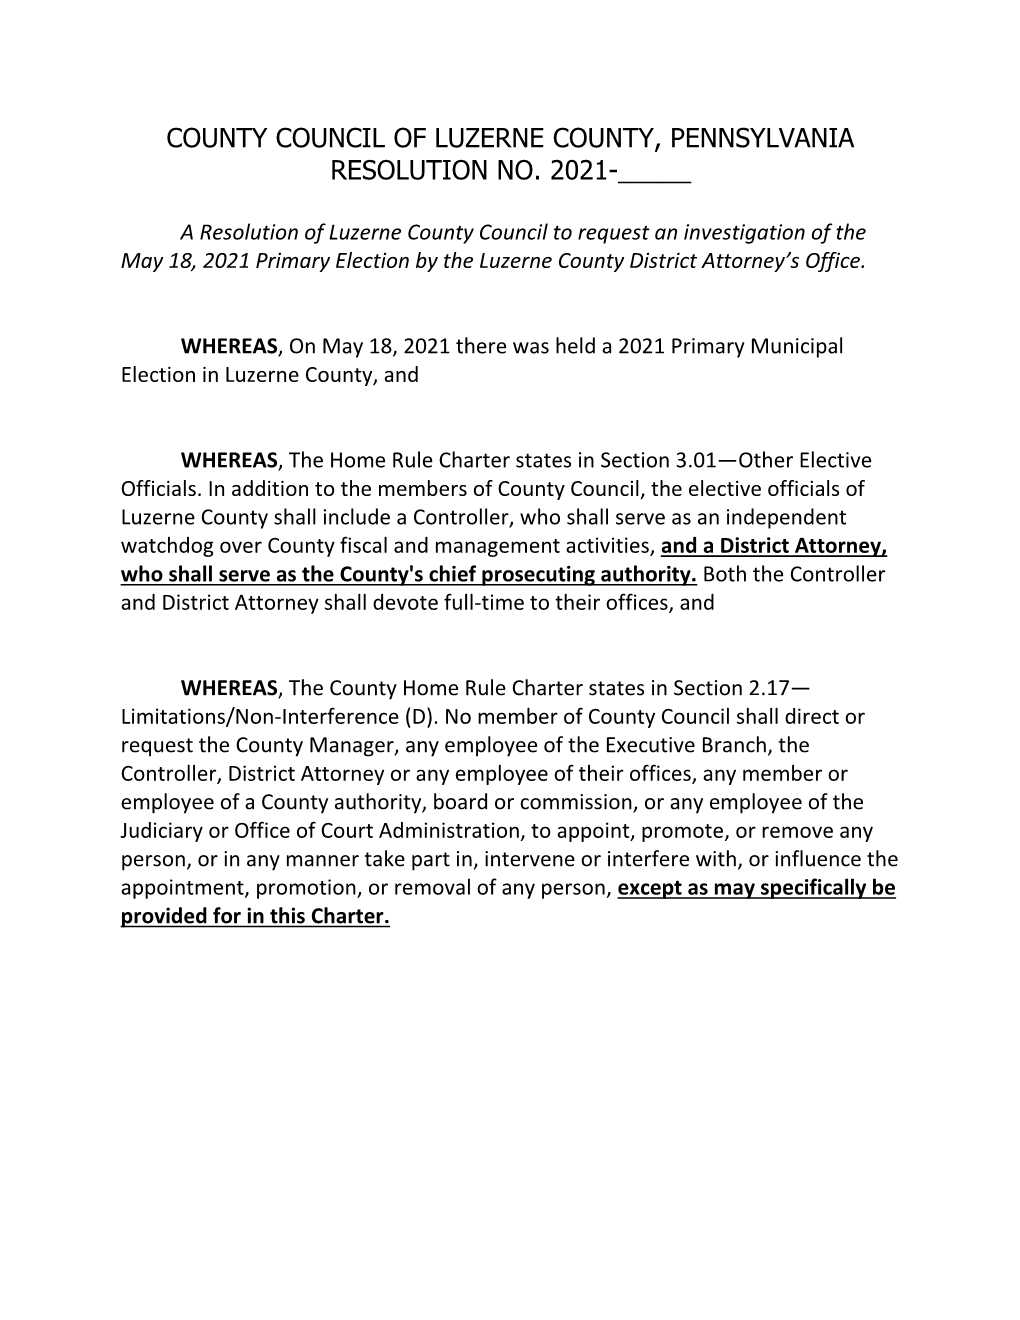 County Council of Luzerne County, Pennsylvania Resolution No. 2021-_____